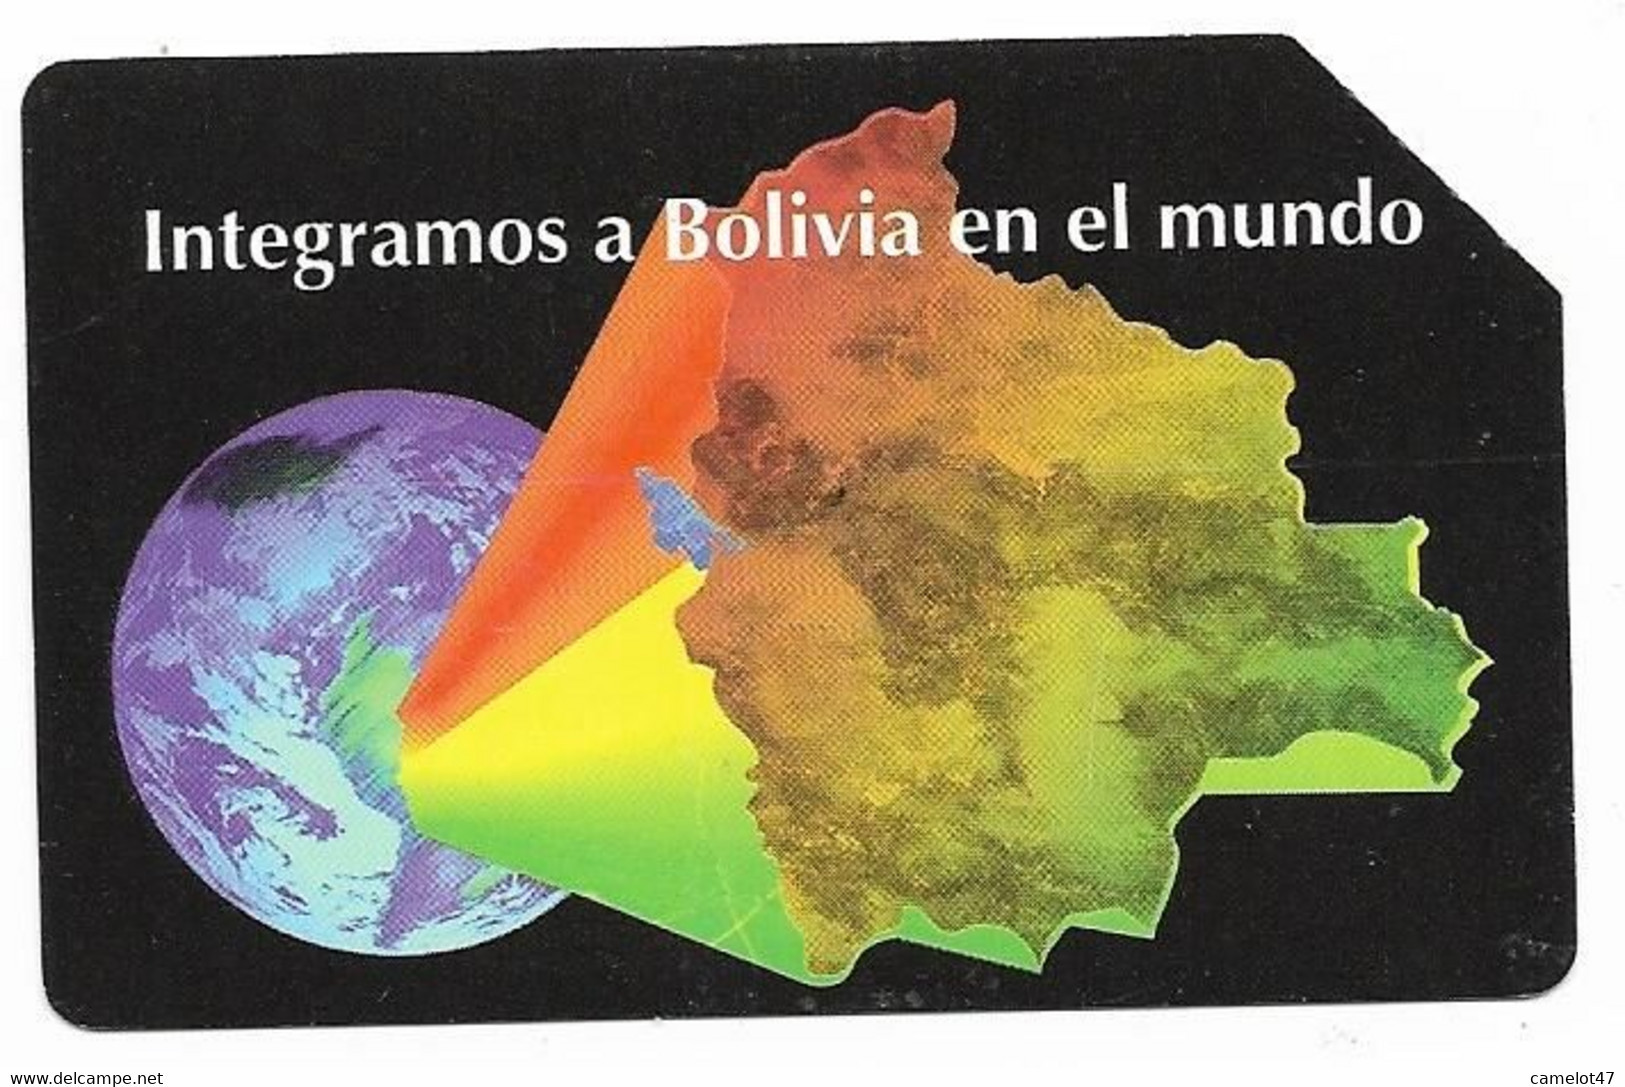 Bolivia, Entel, Urmet Used Phone Card, No Value, Collectors Item, # Bolivia-34 - Bolivie